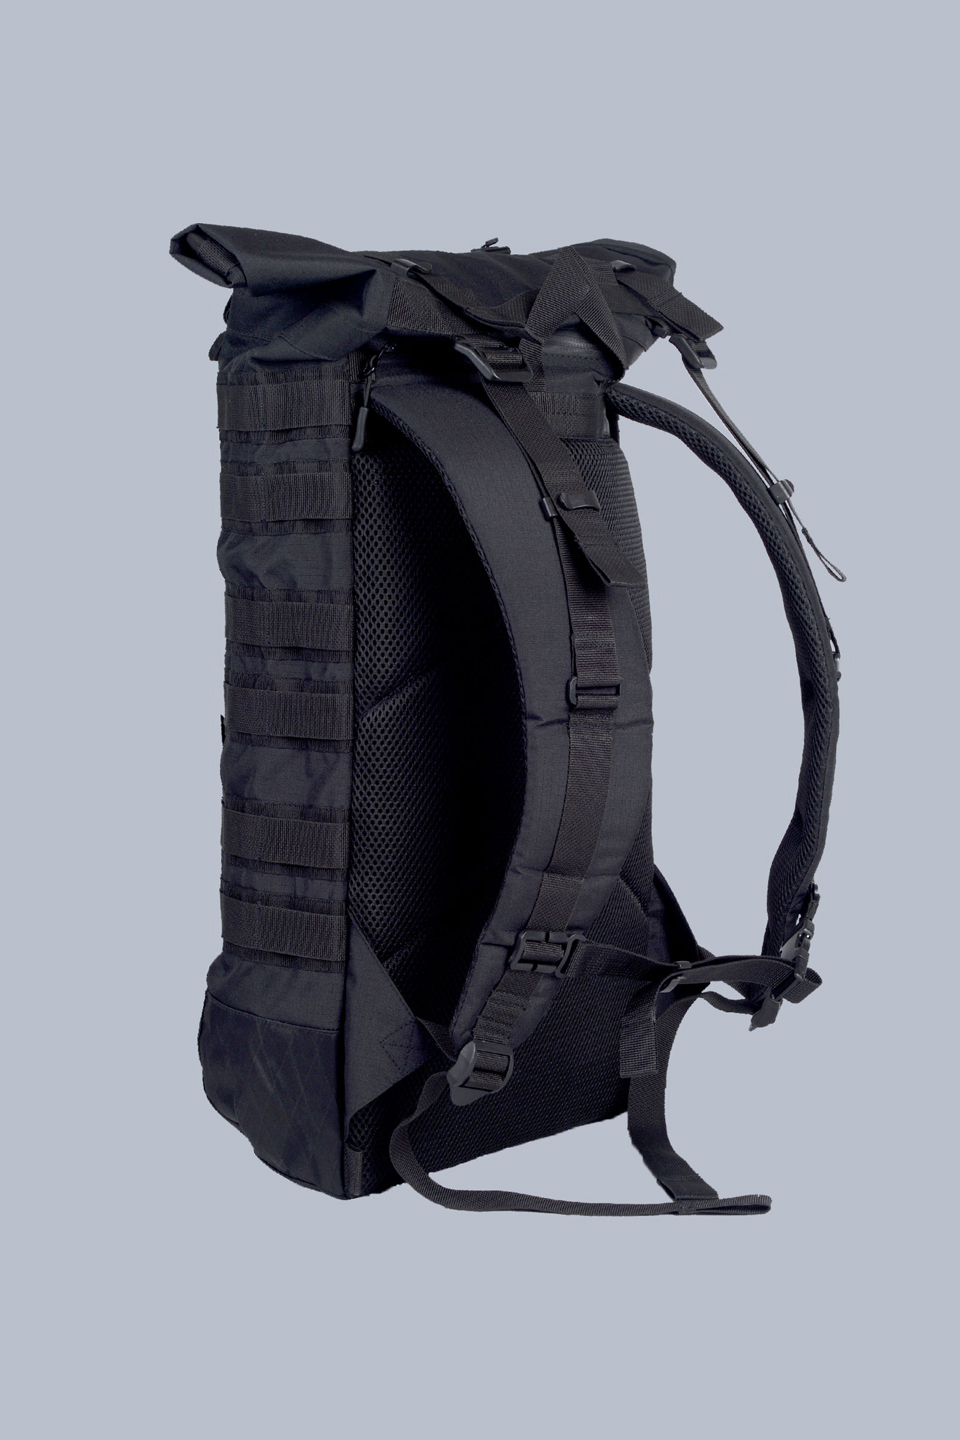 Atarica backpack